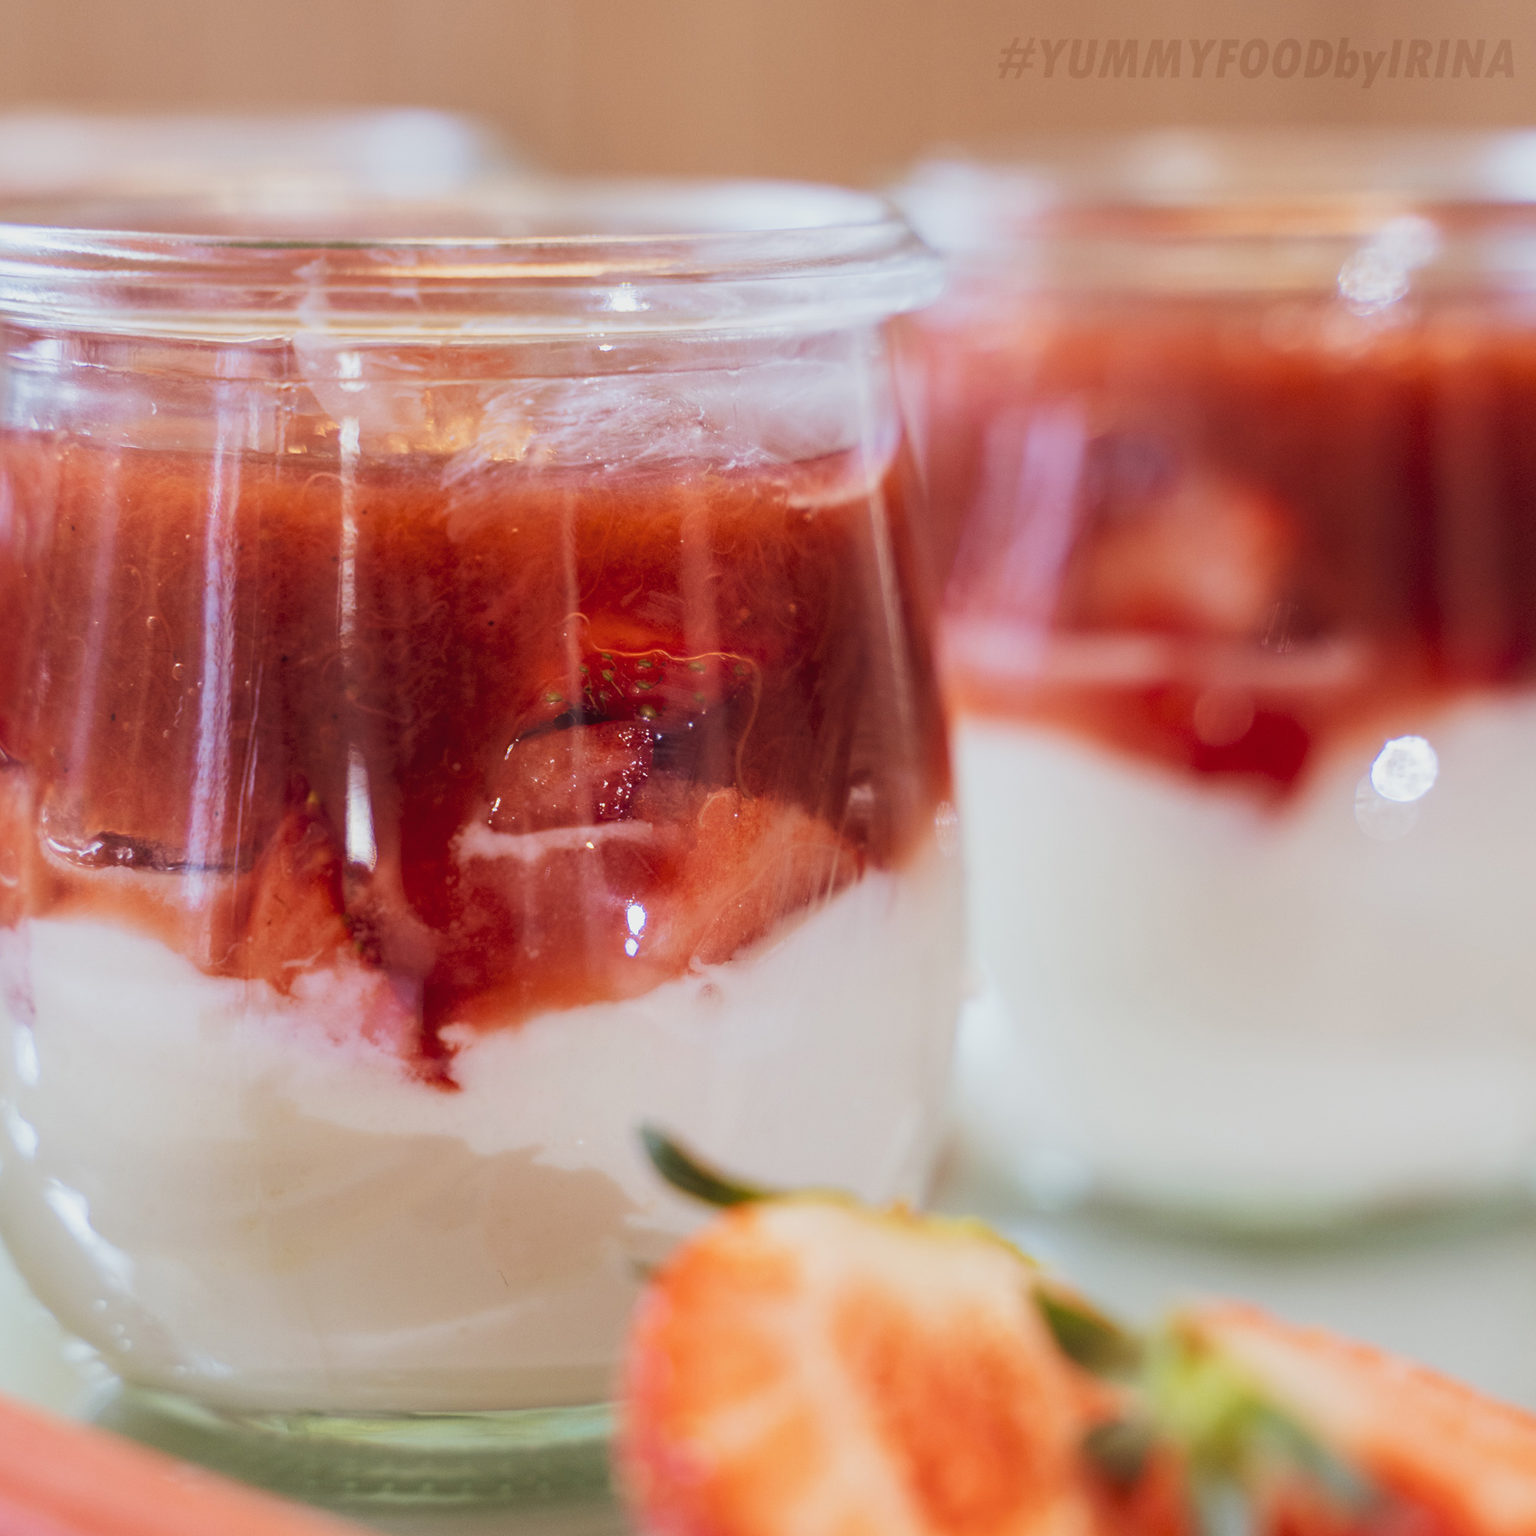 Rezept: Rhabarber-Erdbeer-Dessert - YUMMYFOODbyirina